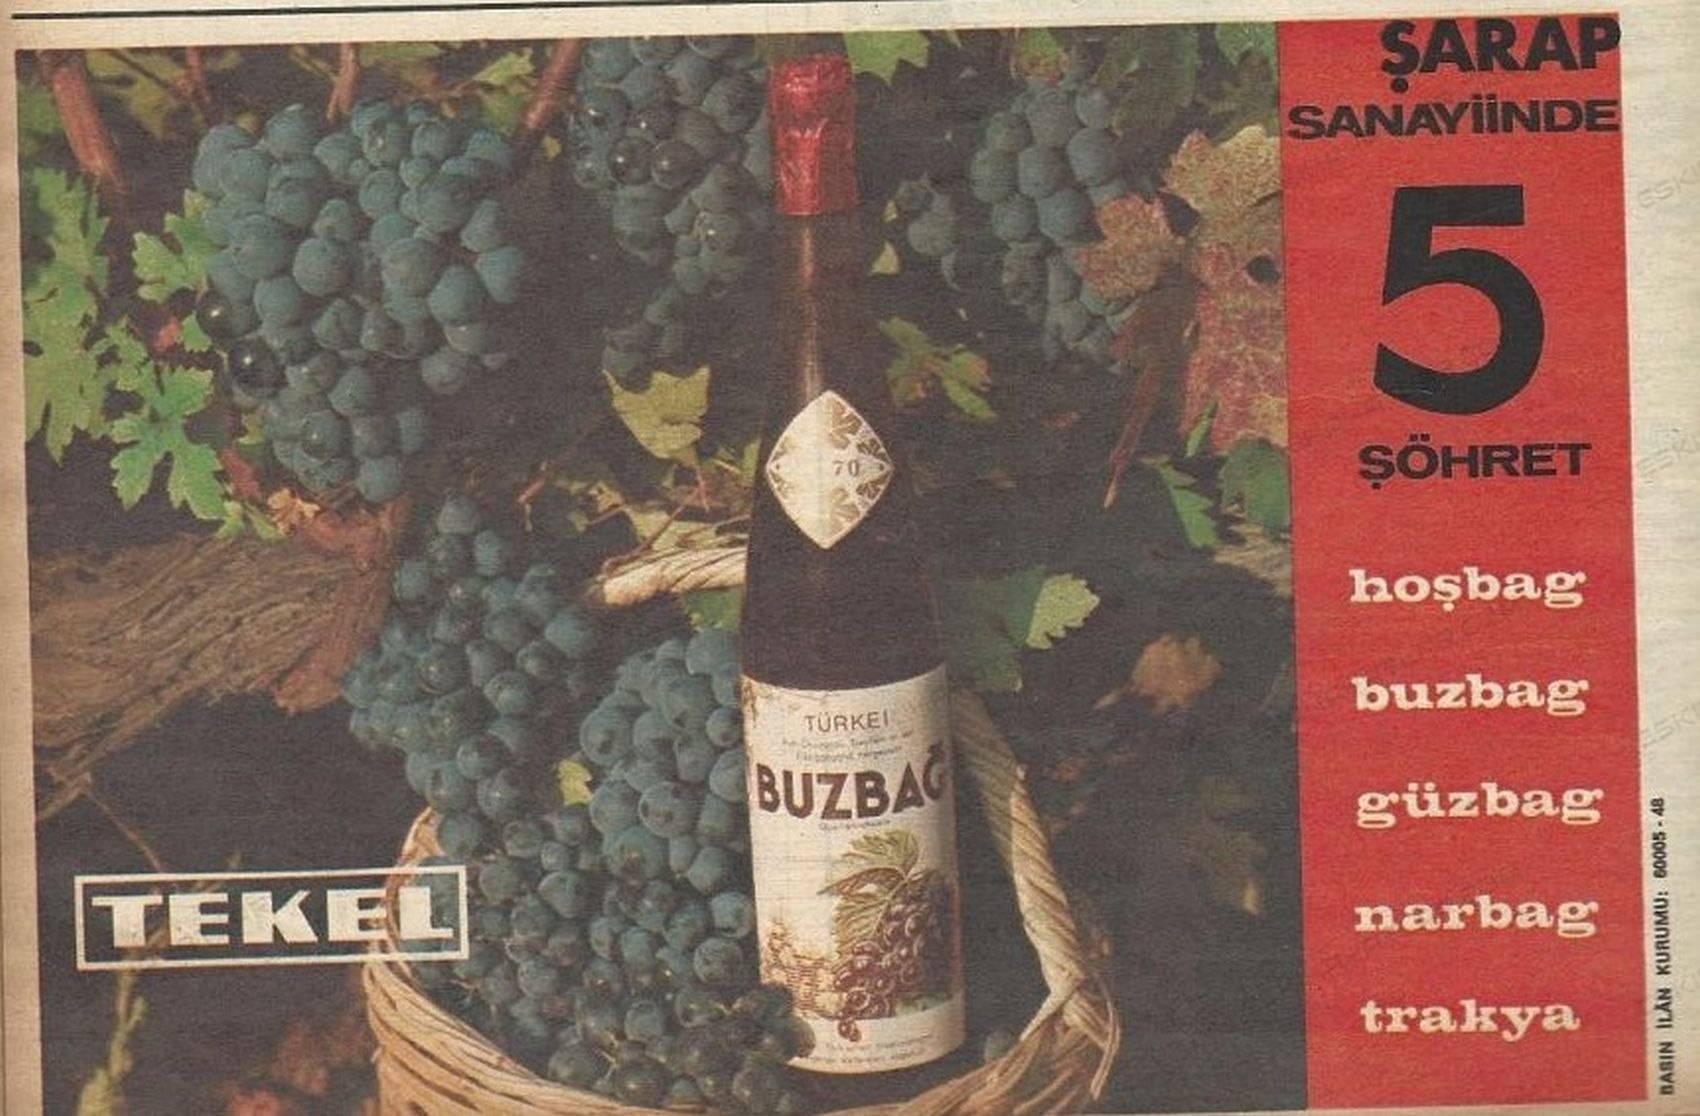 0247-tekel-buzbag-sarap-reklami-1973-yilinda-alkollu-ickiler-hosbag-buzbag-guzbag-narbag-trakya